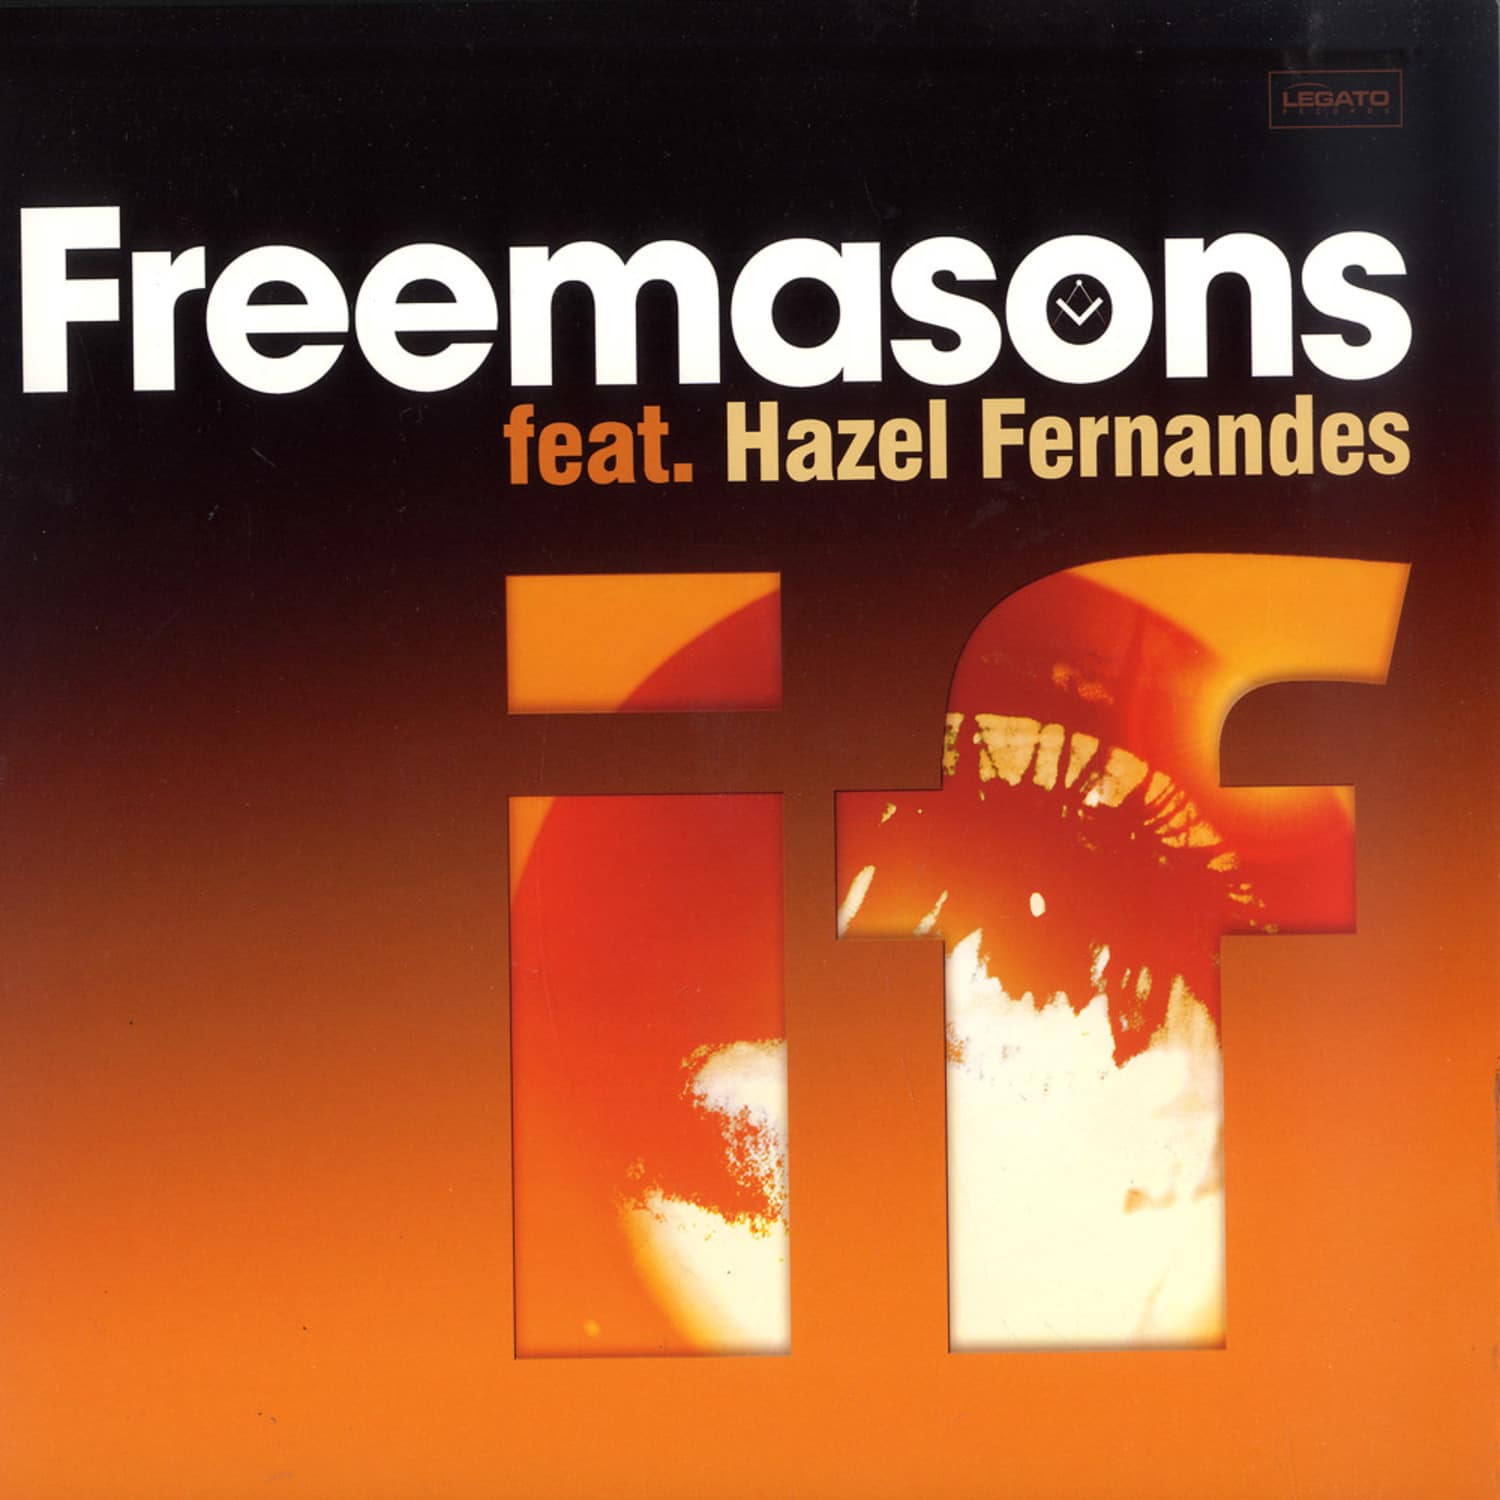 Freemasons Feat. Hazel Fernand - IF